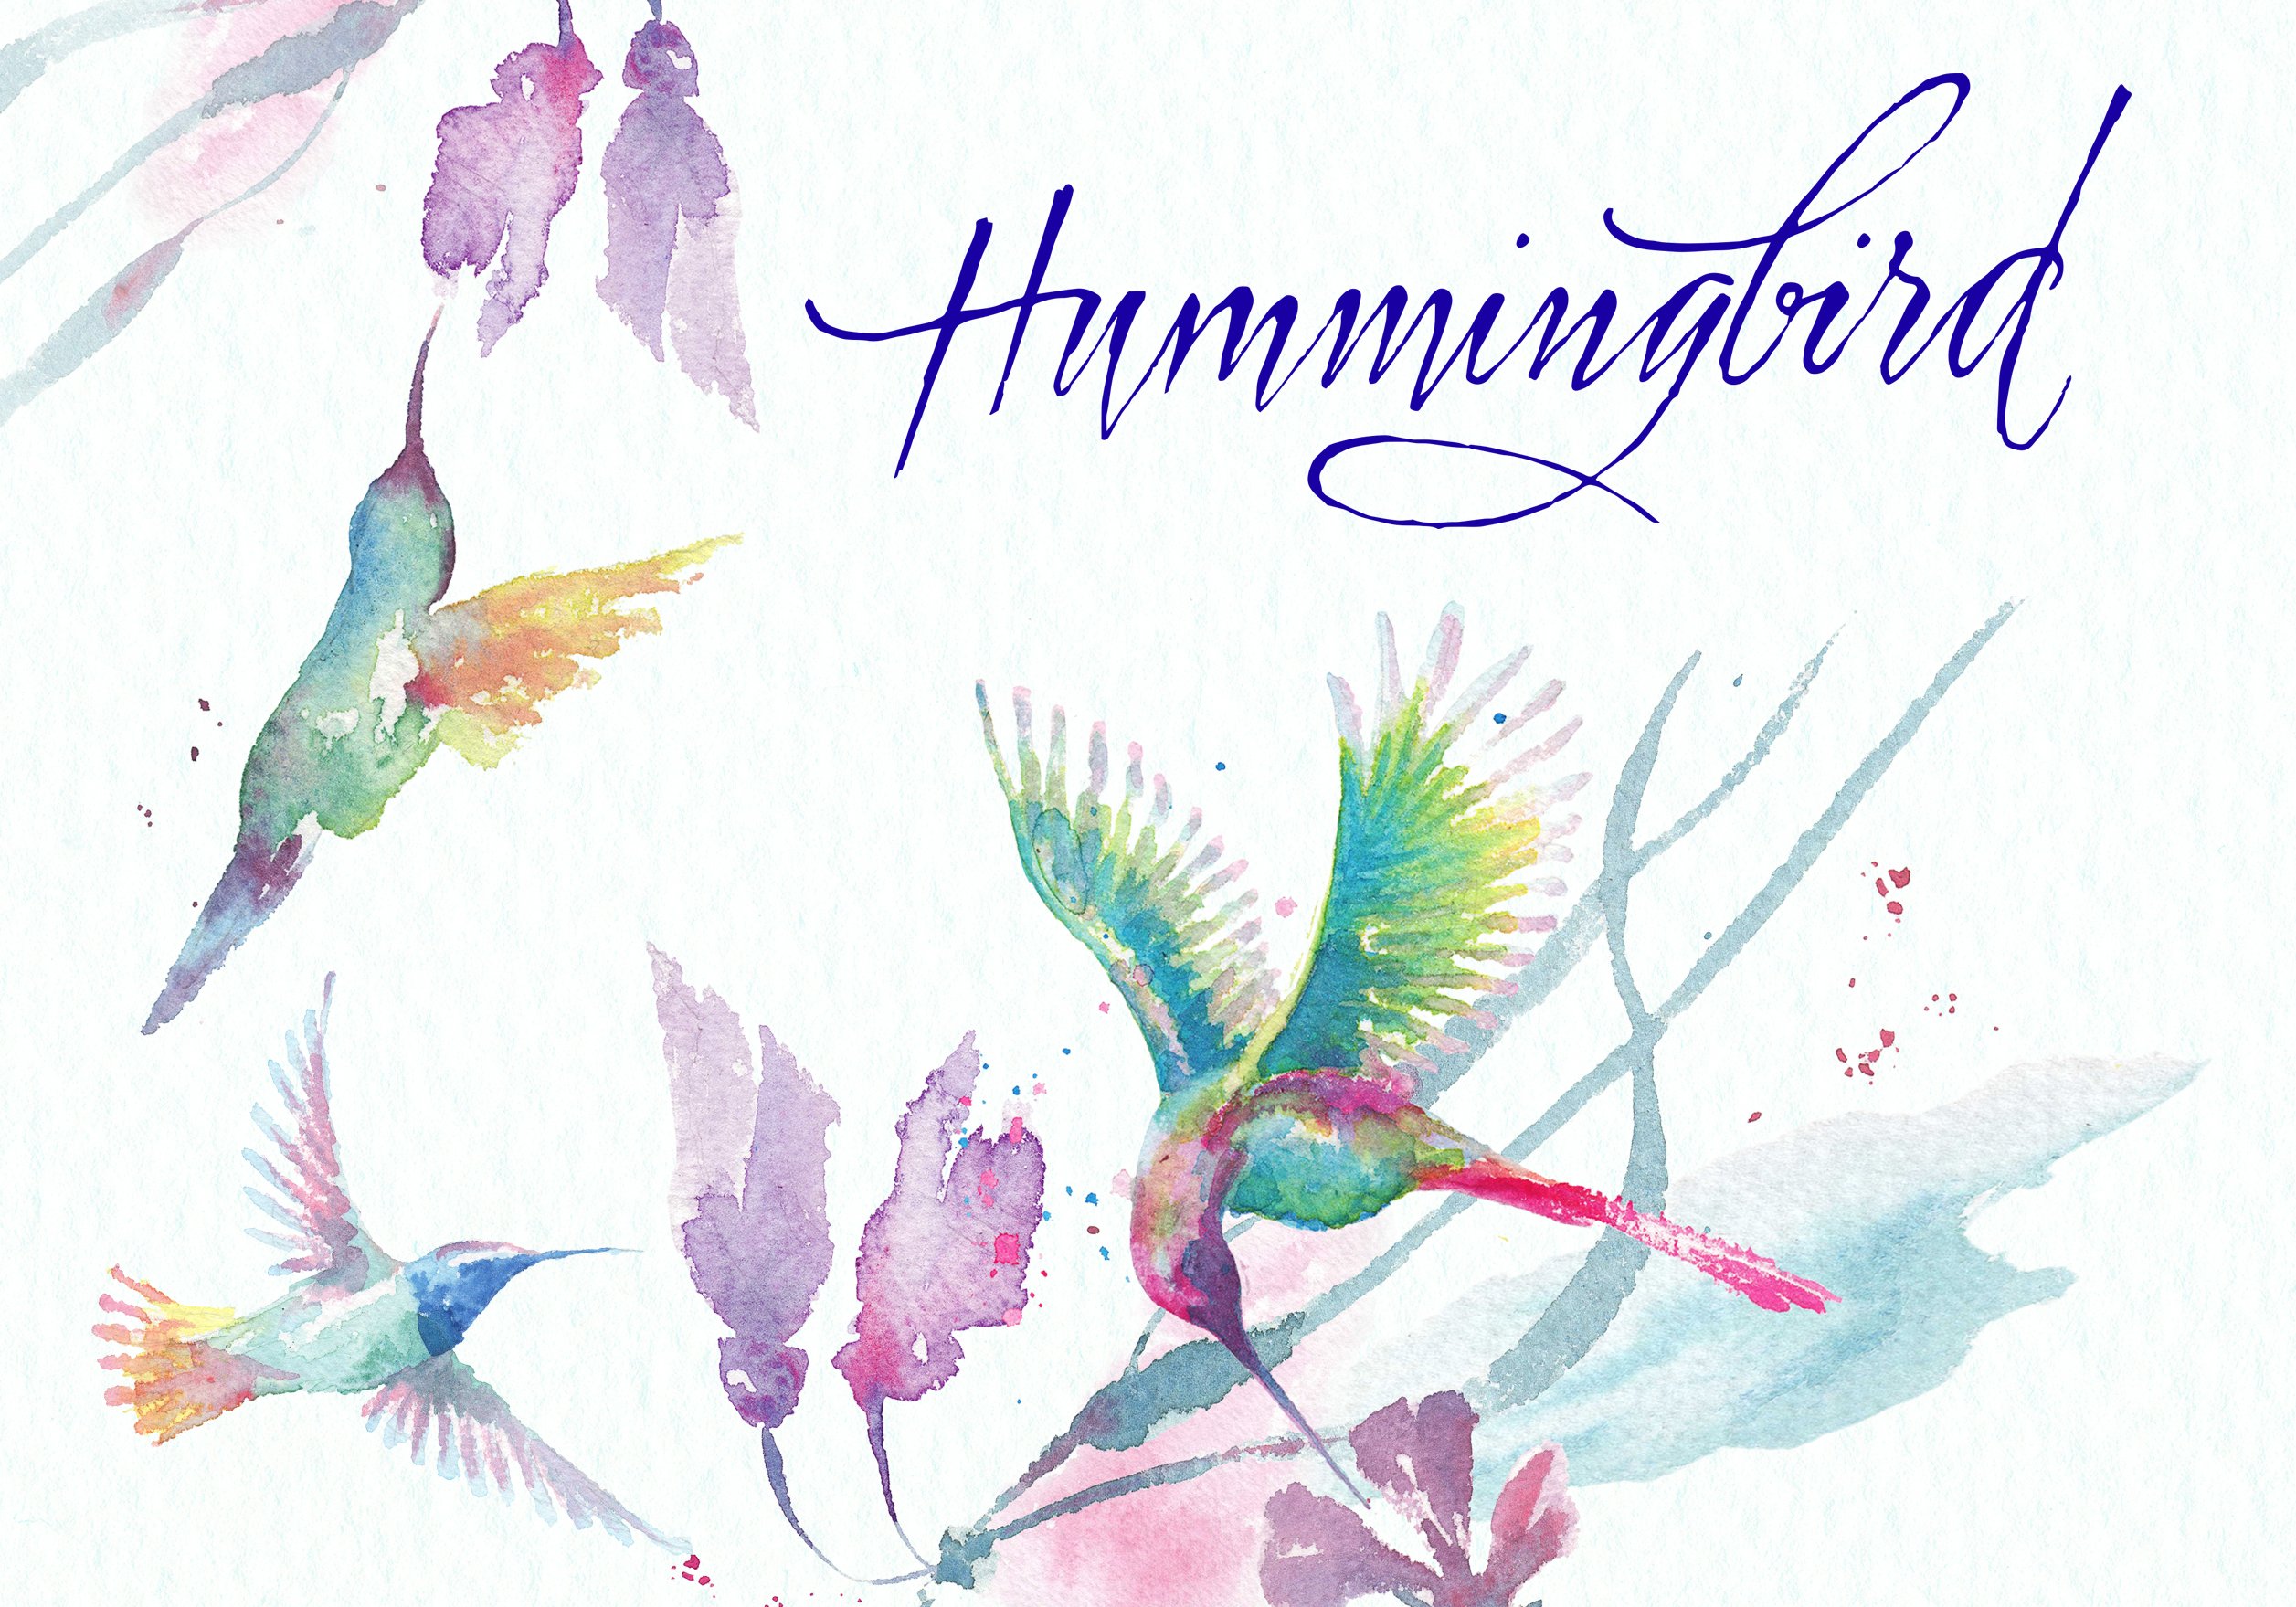 Hummingbird & tropical flowers cover image.